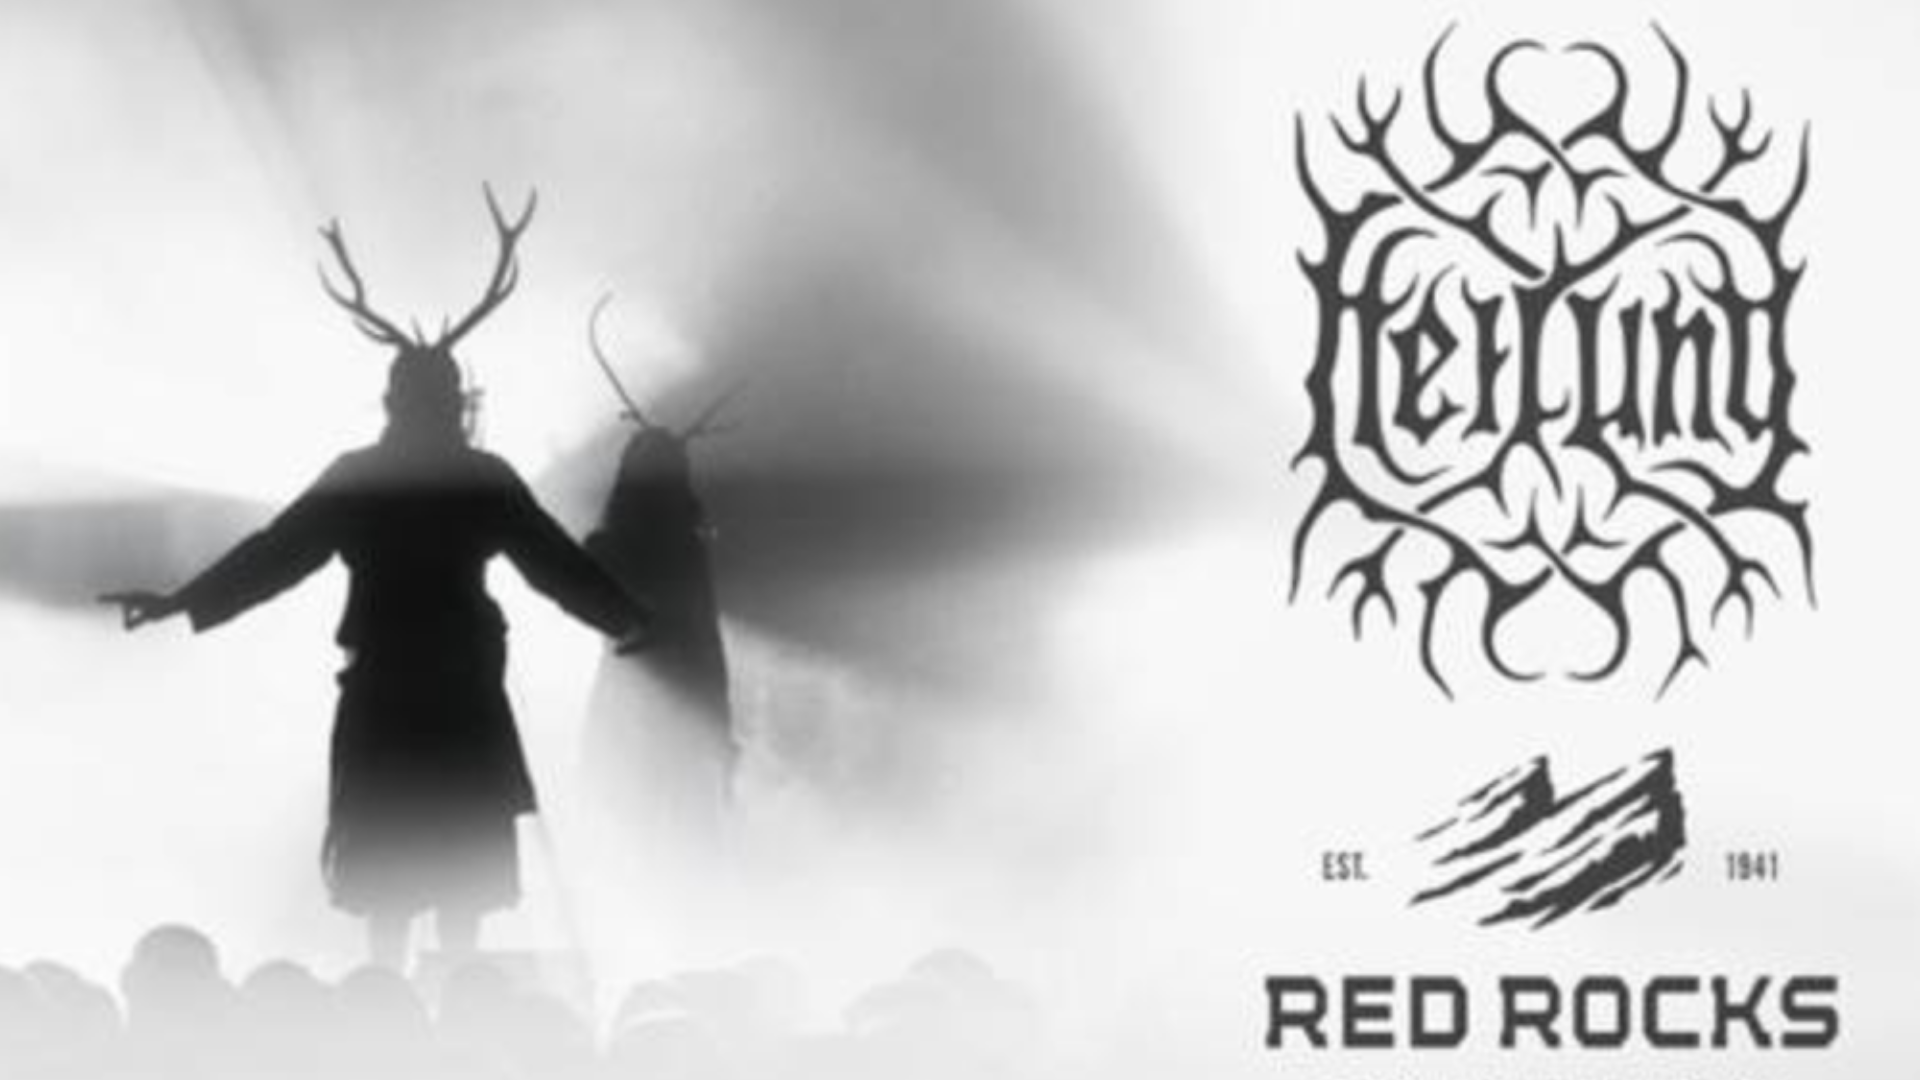 Heilung announces Red Rocks Colorado concert in October 2020 | 9news.com